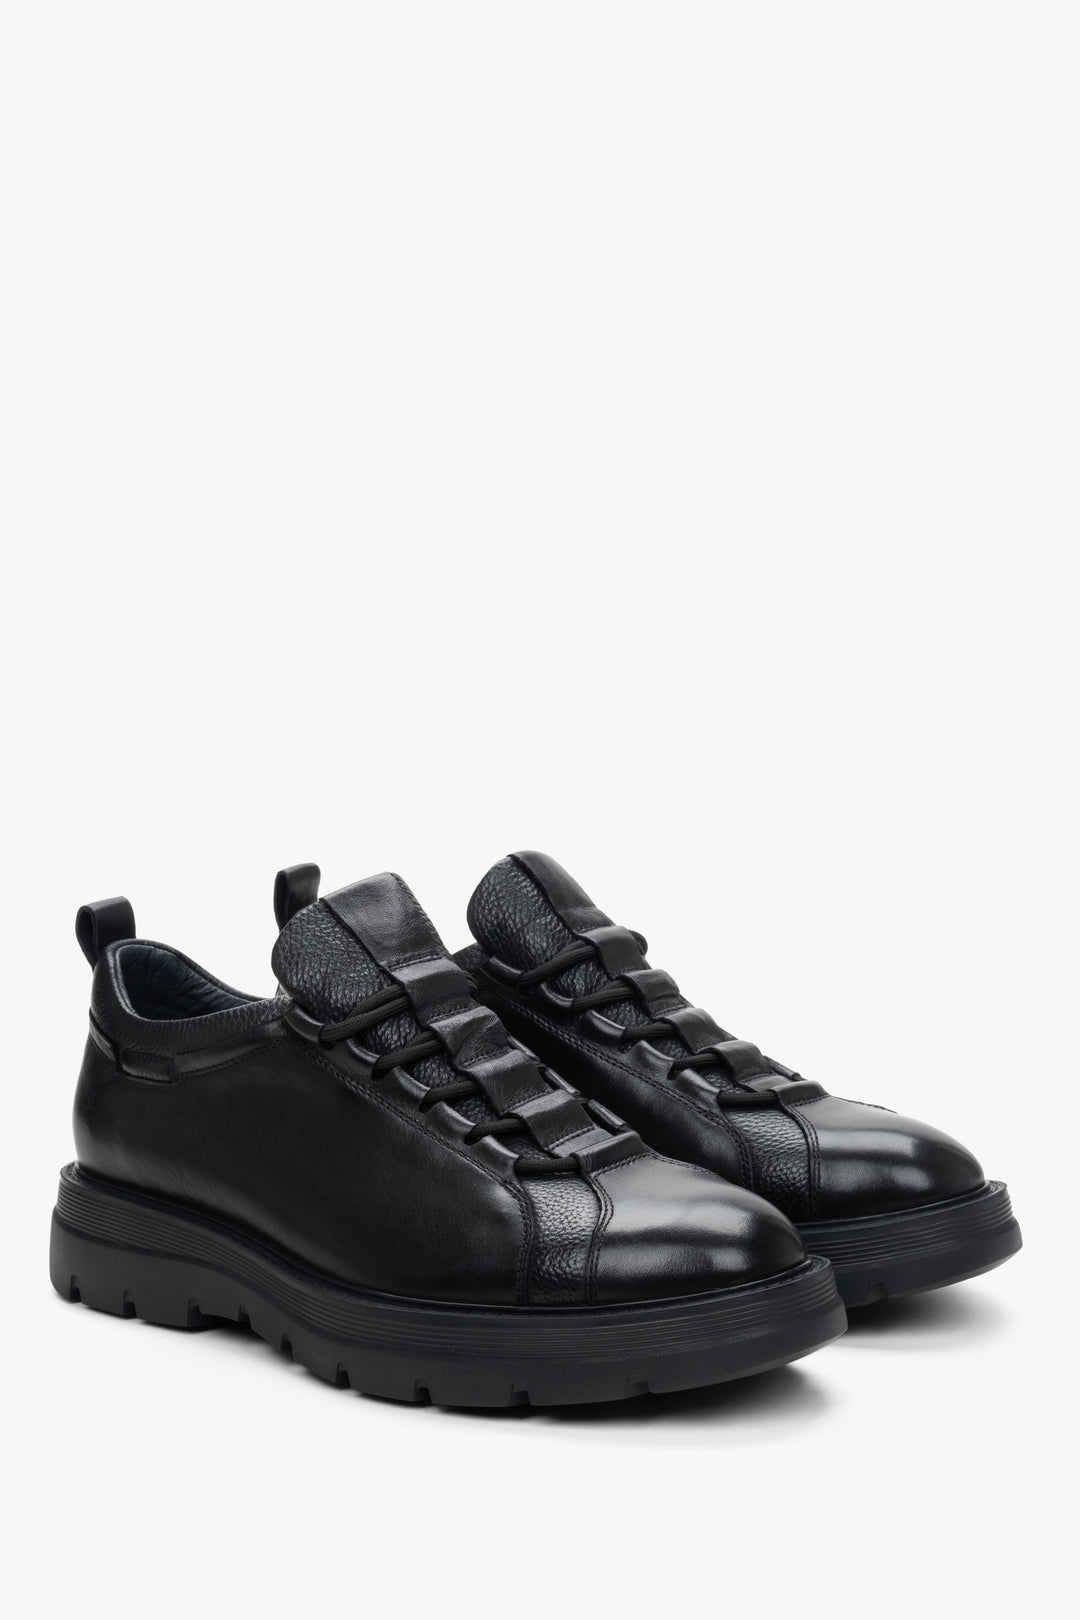 Men's black genuine leather sneakers by Estro.